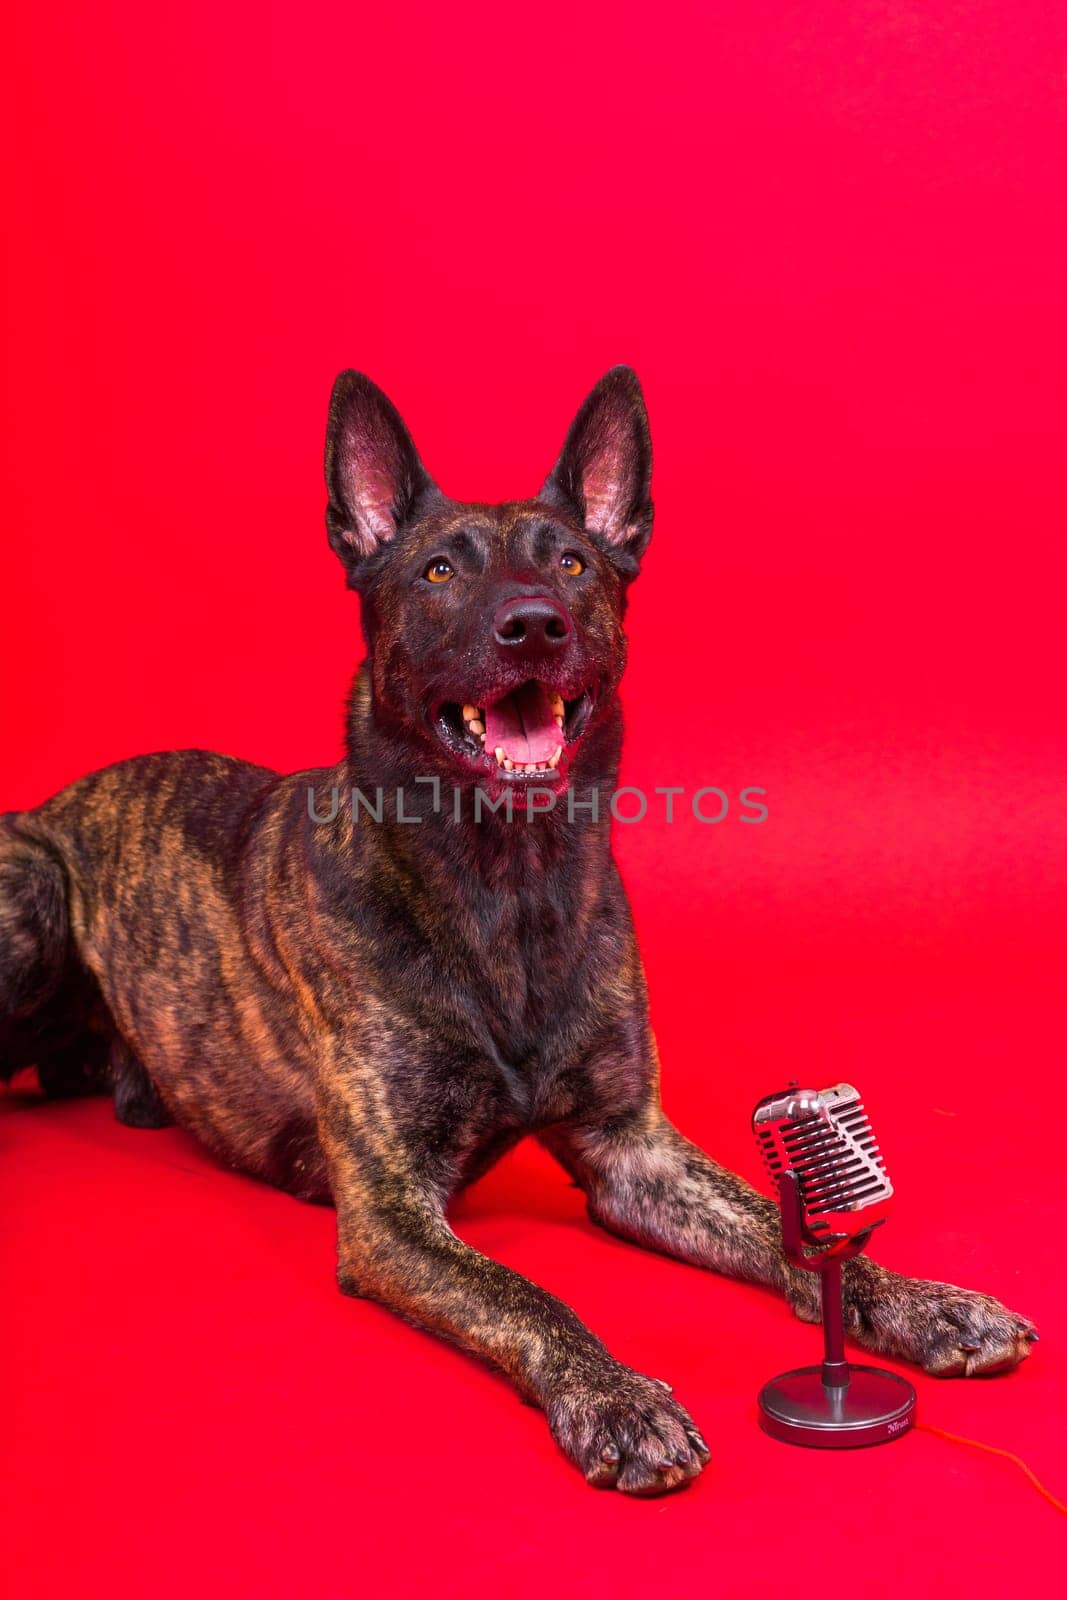 Cute singing dog Dutch shepherd in a studio red yellow background by Zelenin